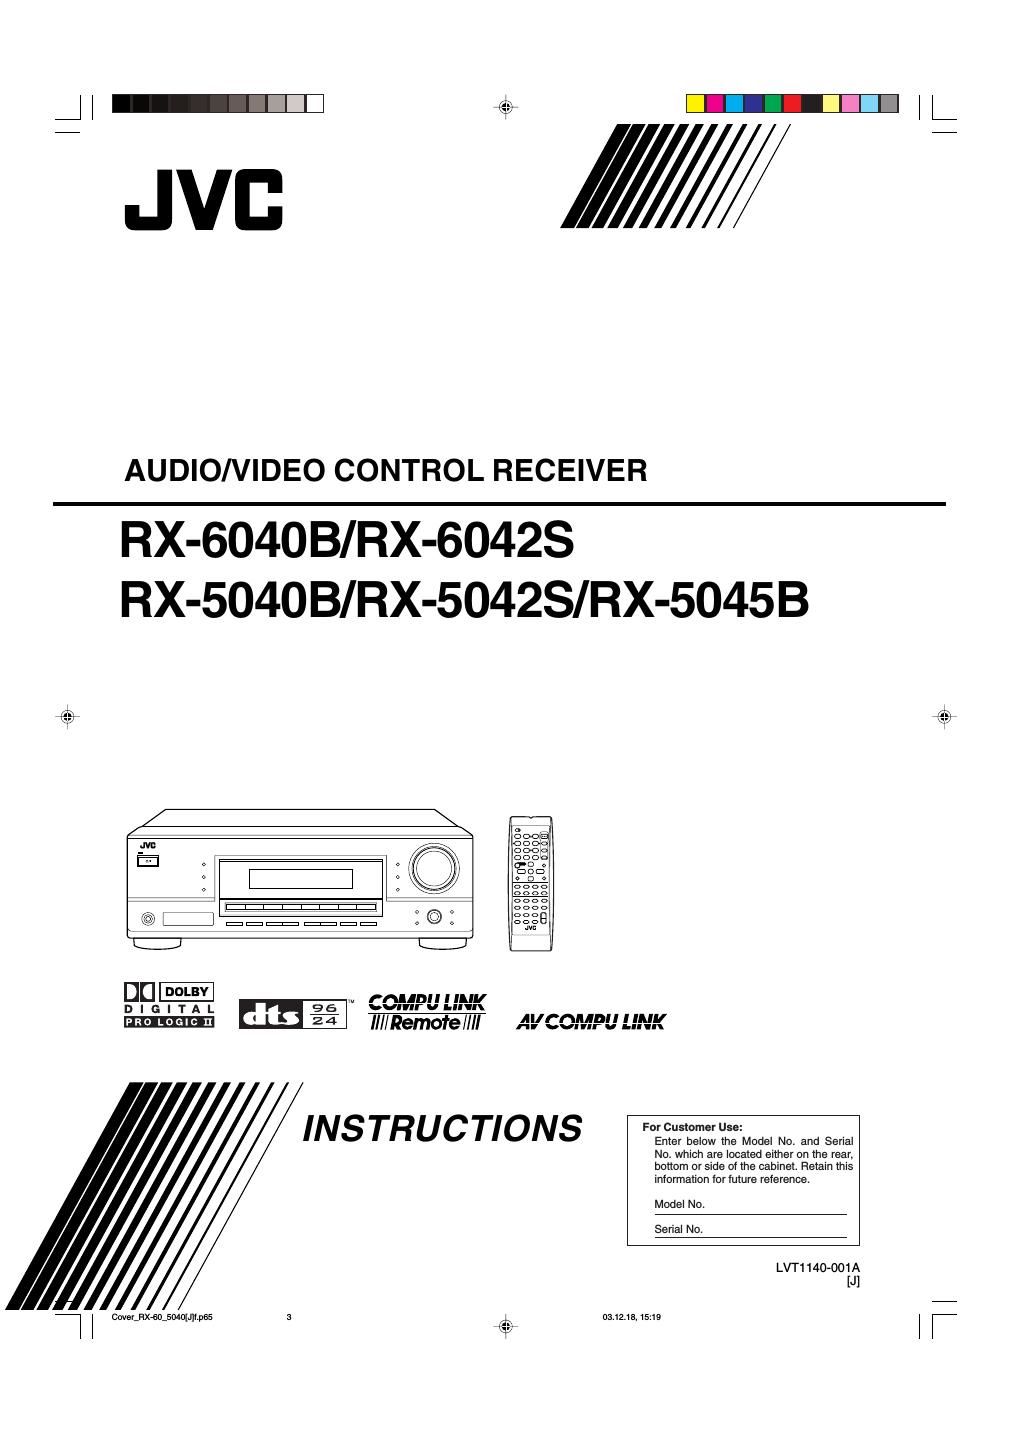 Jvc RX 5045 B Owners Manual